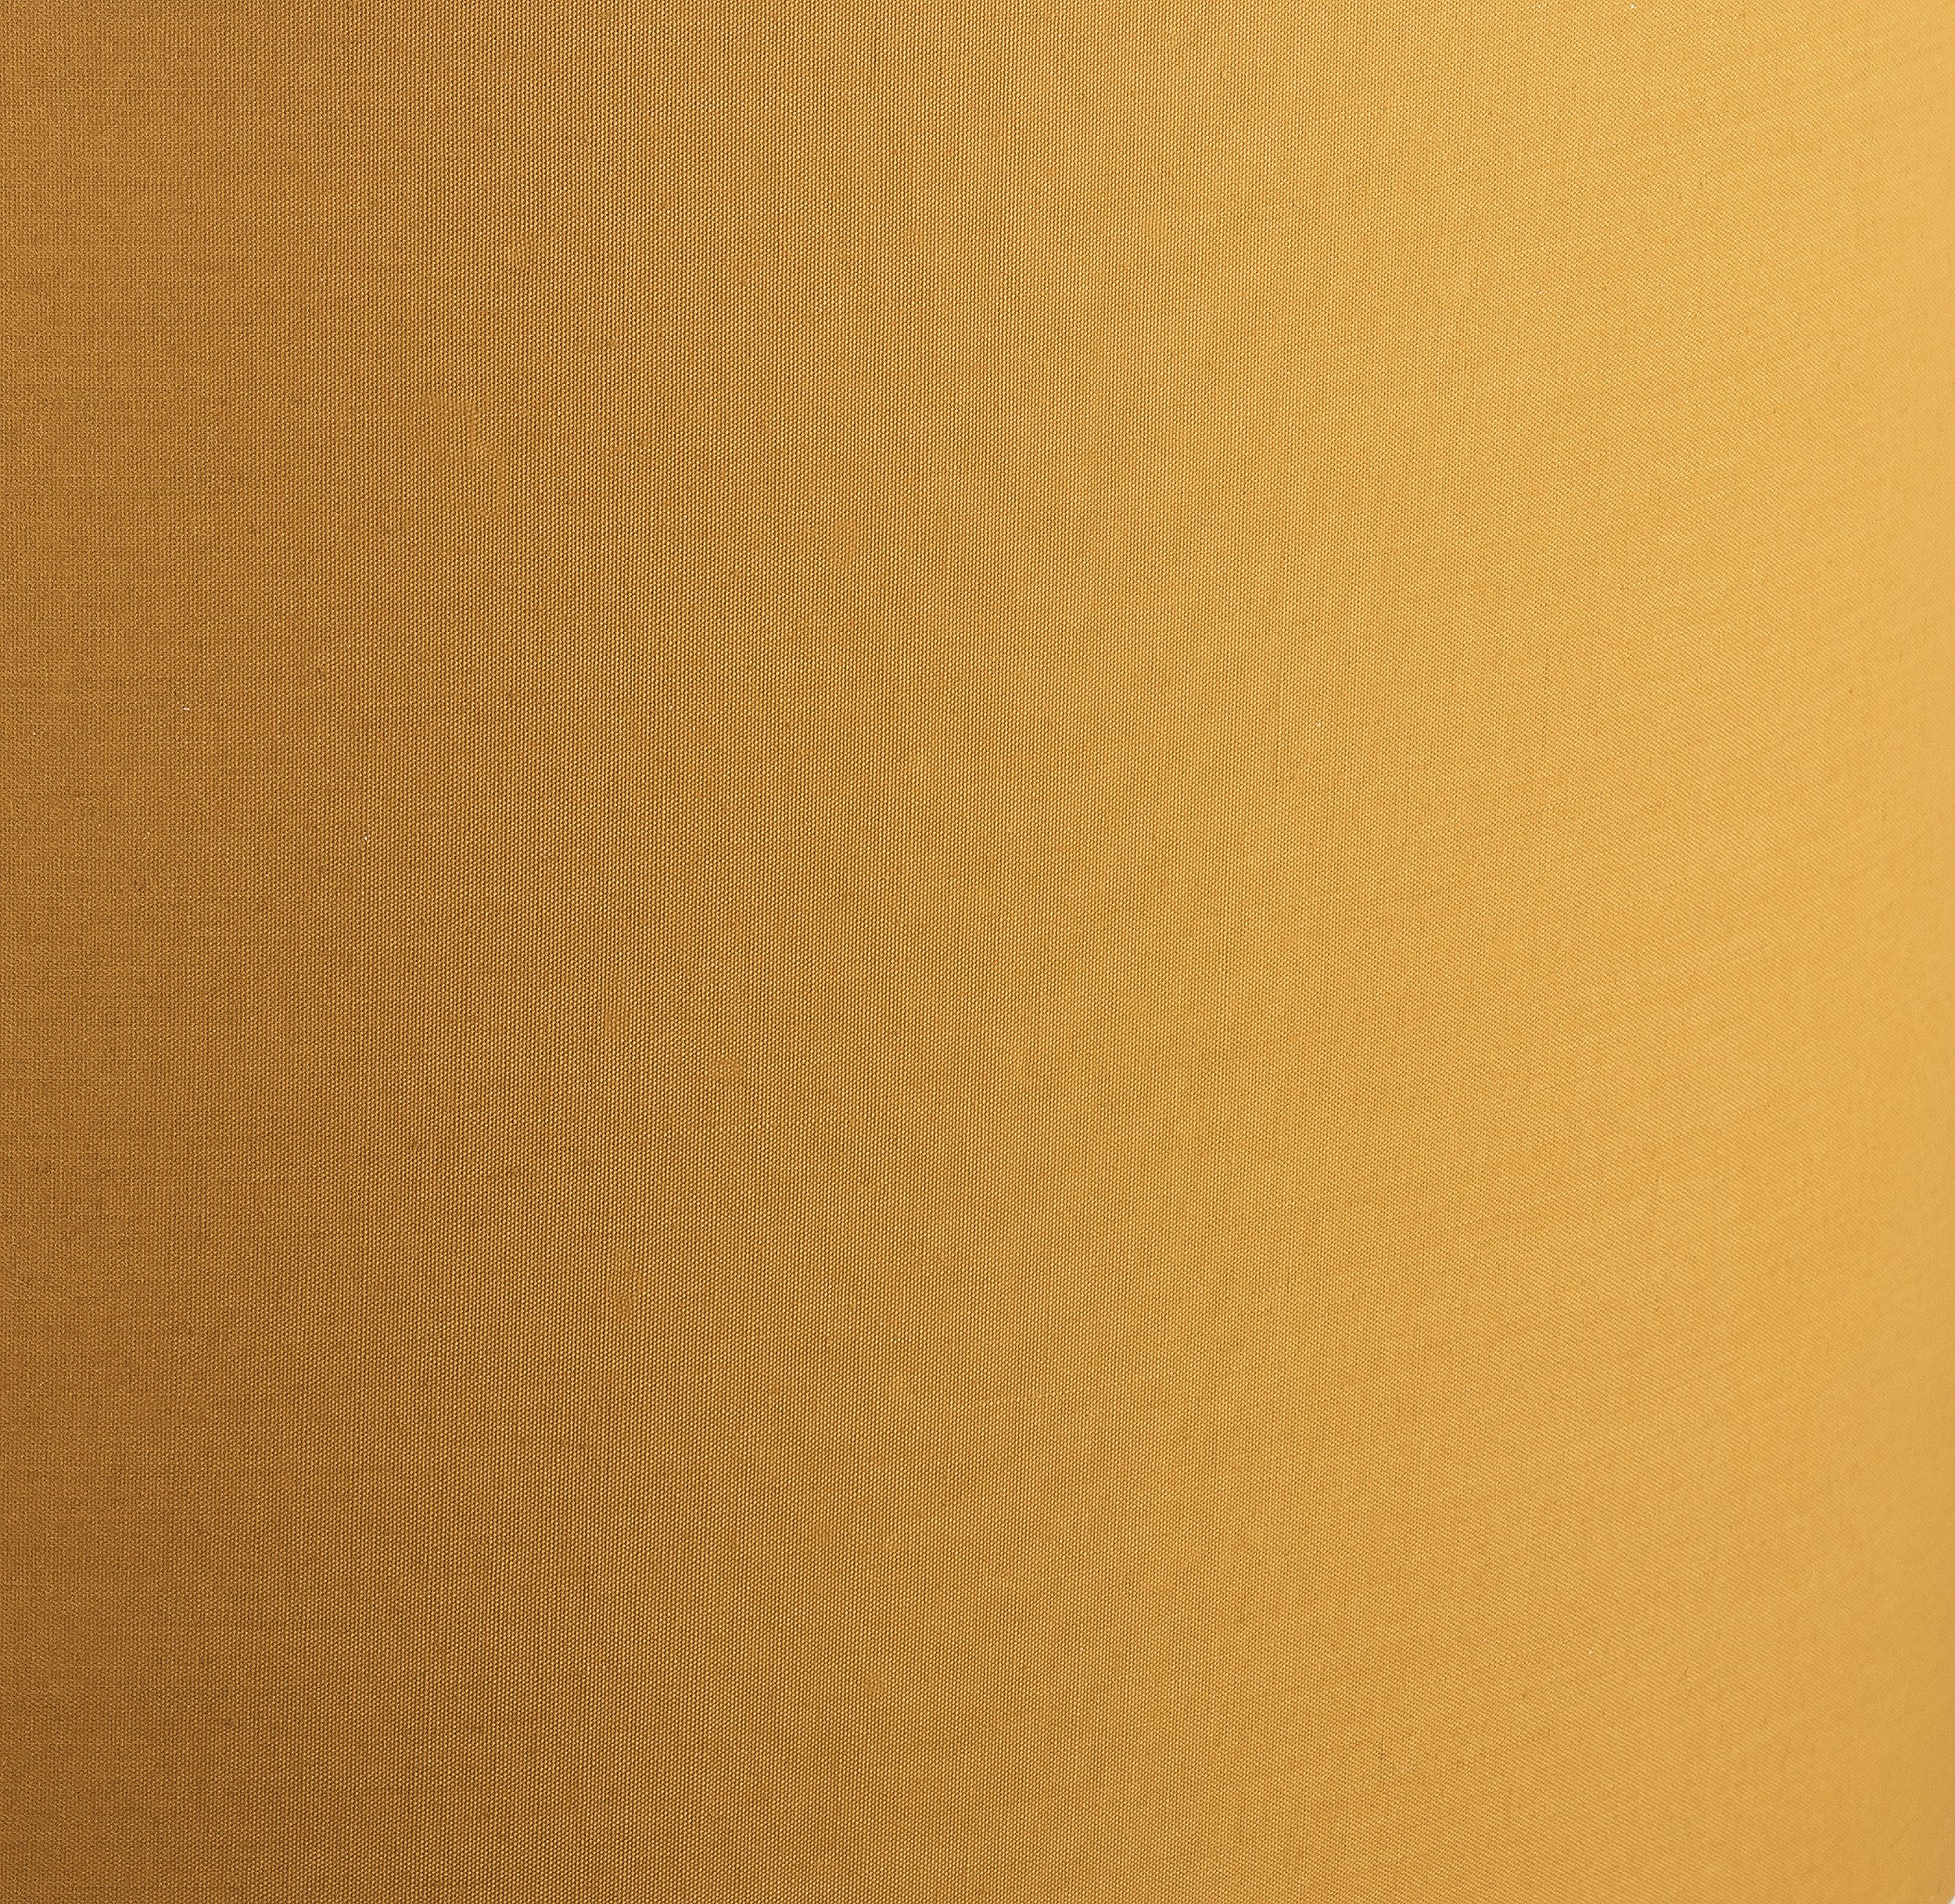 GoodHome Kpezin Mustard yellow Fabric dyed Light shade (D)20cm